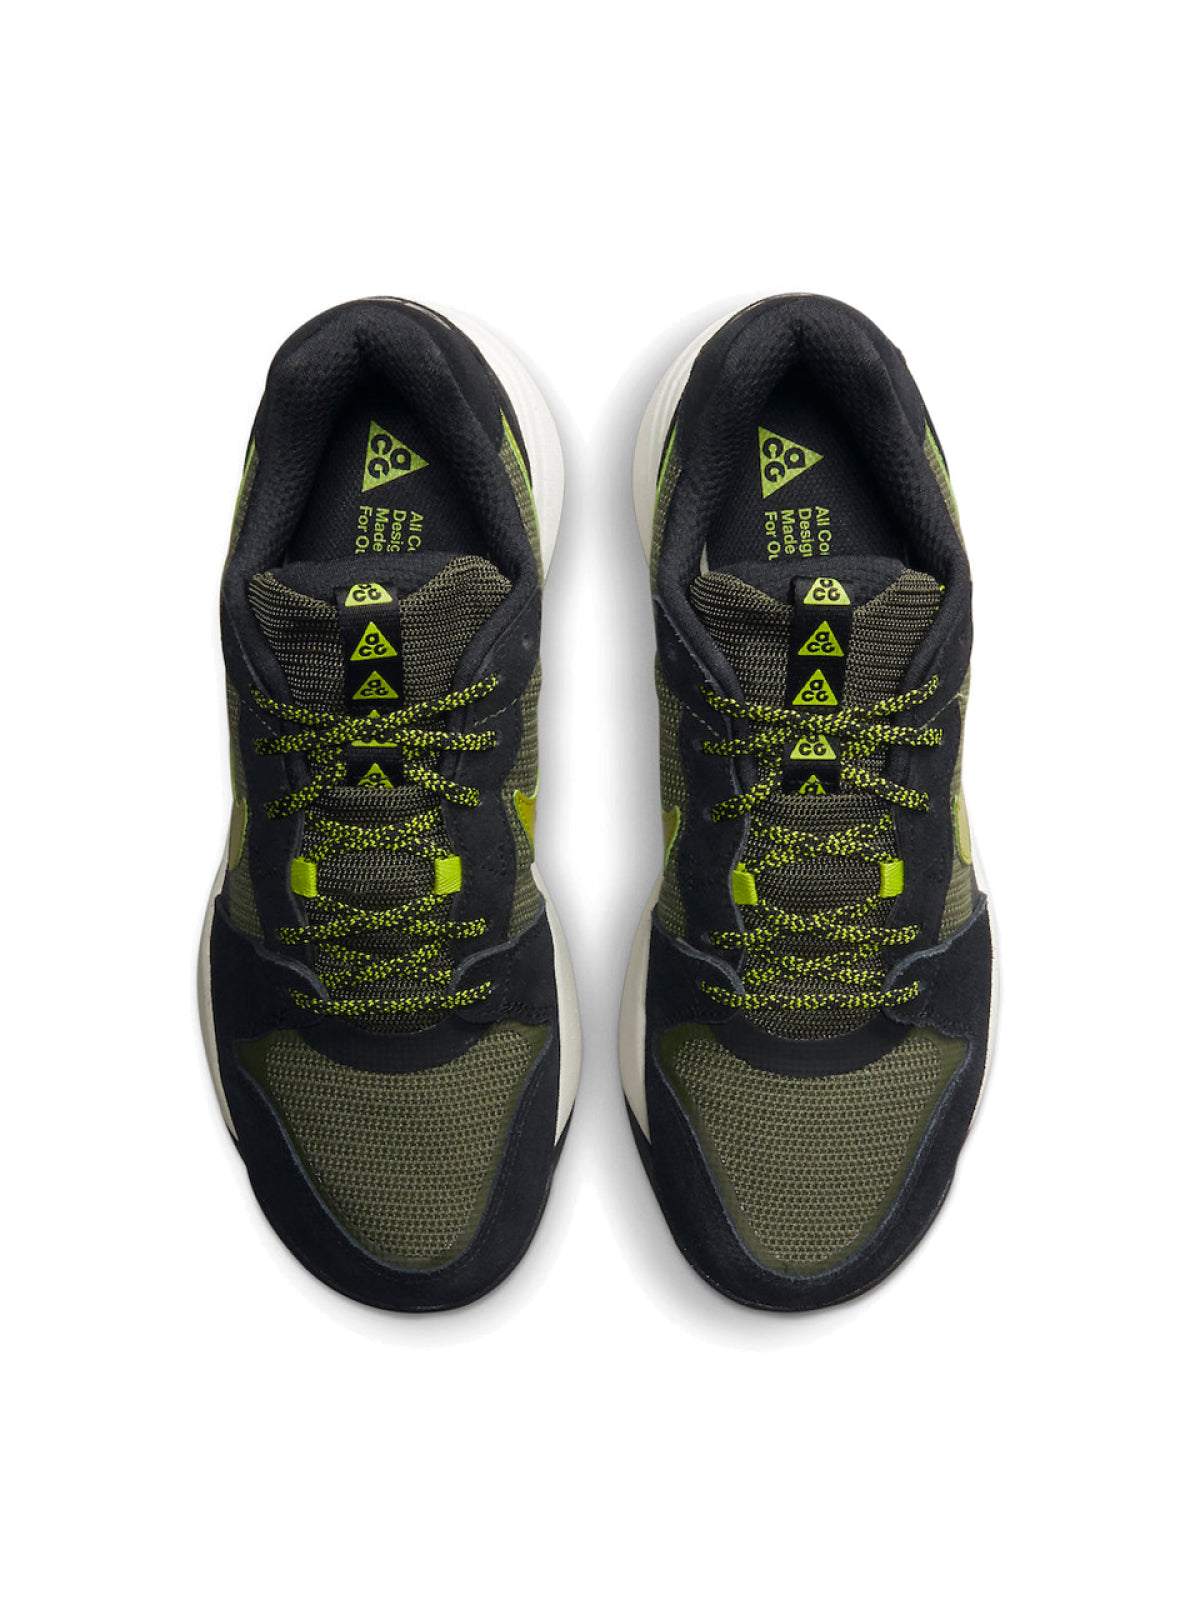 Nike-OUTLET-SALE-ACG Lowcate Cargo Khaki Sneakers-ARCHIVIST